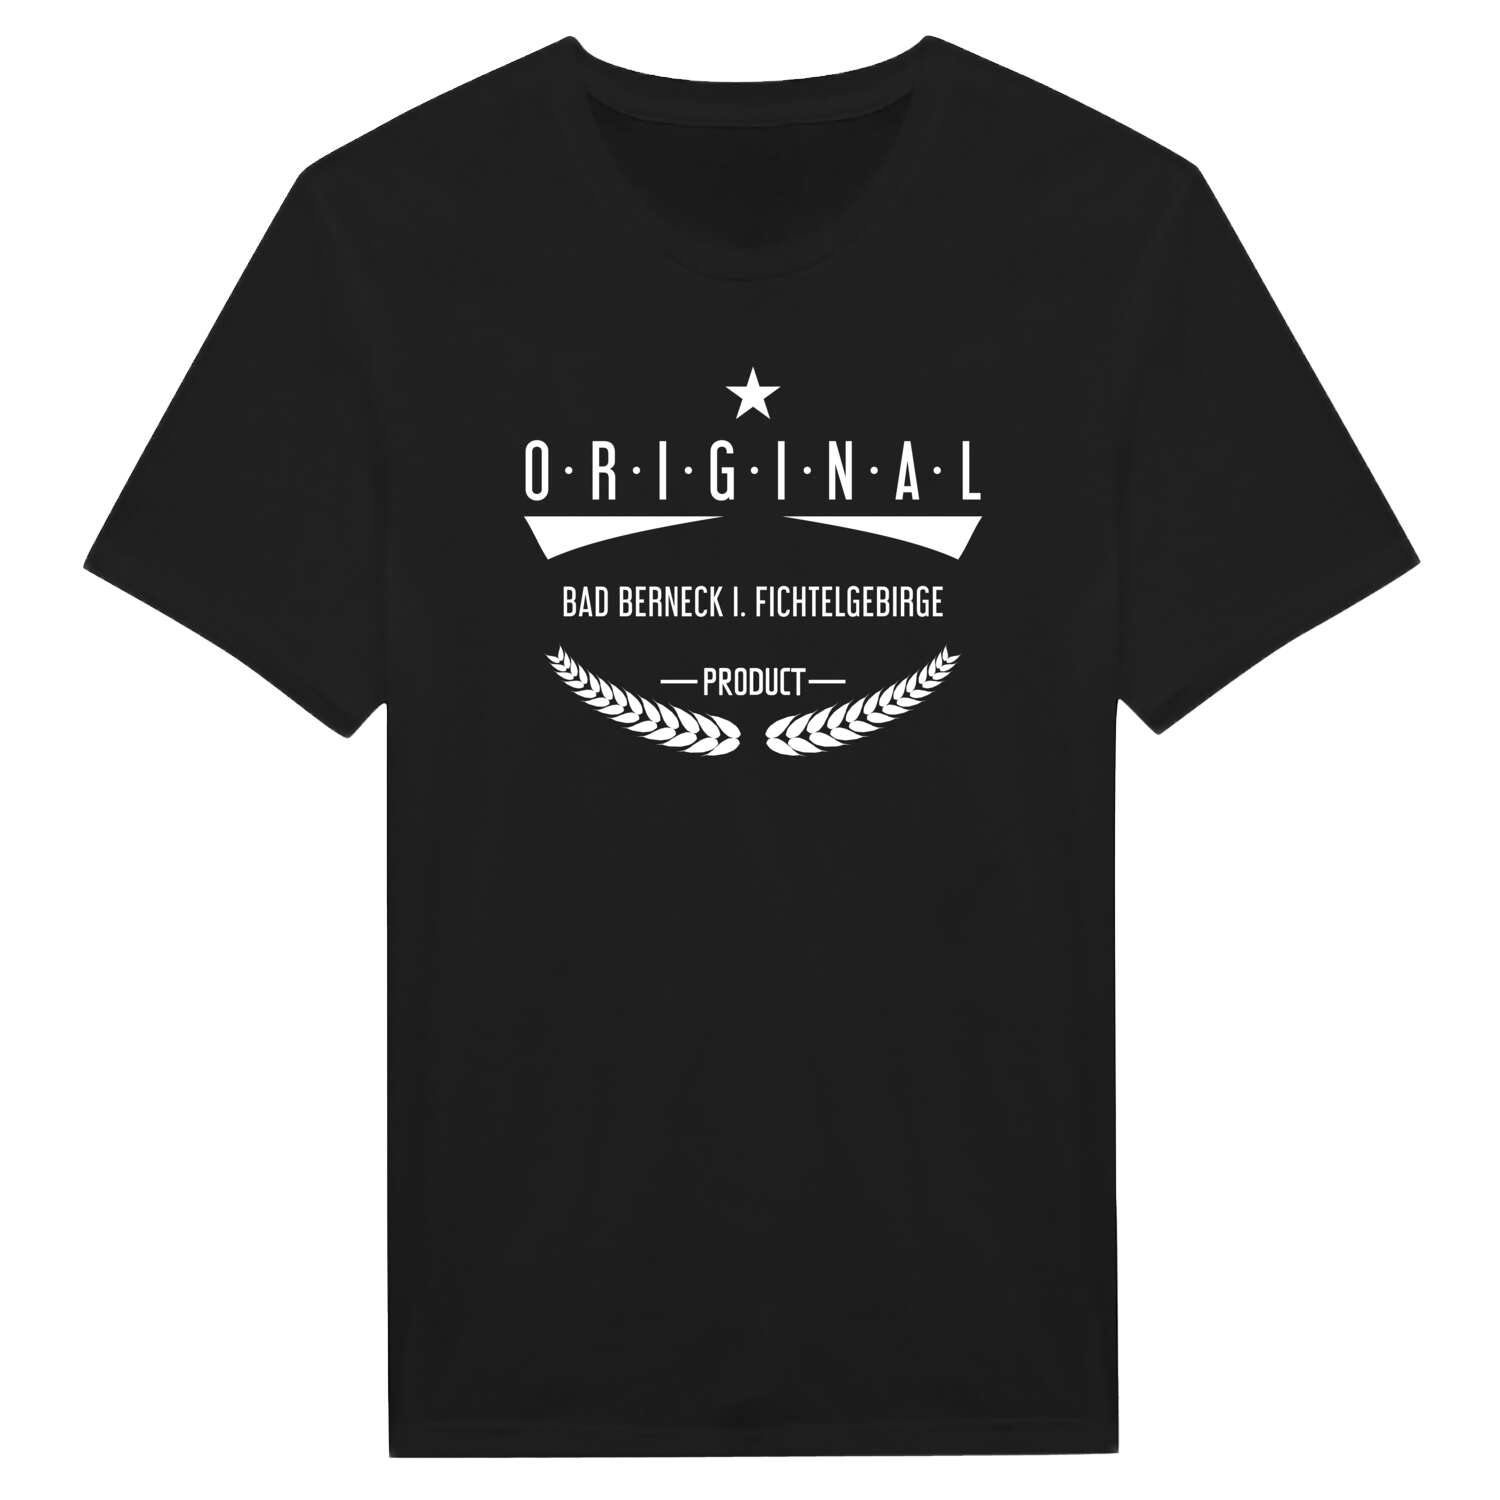 Bad Berneck i. Fichtelgebirge T-Shirt »Original Product«